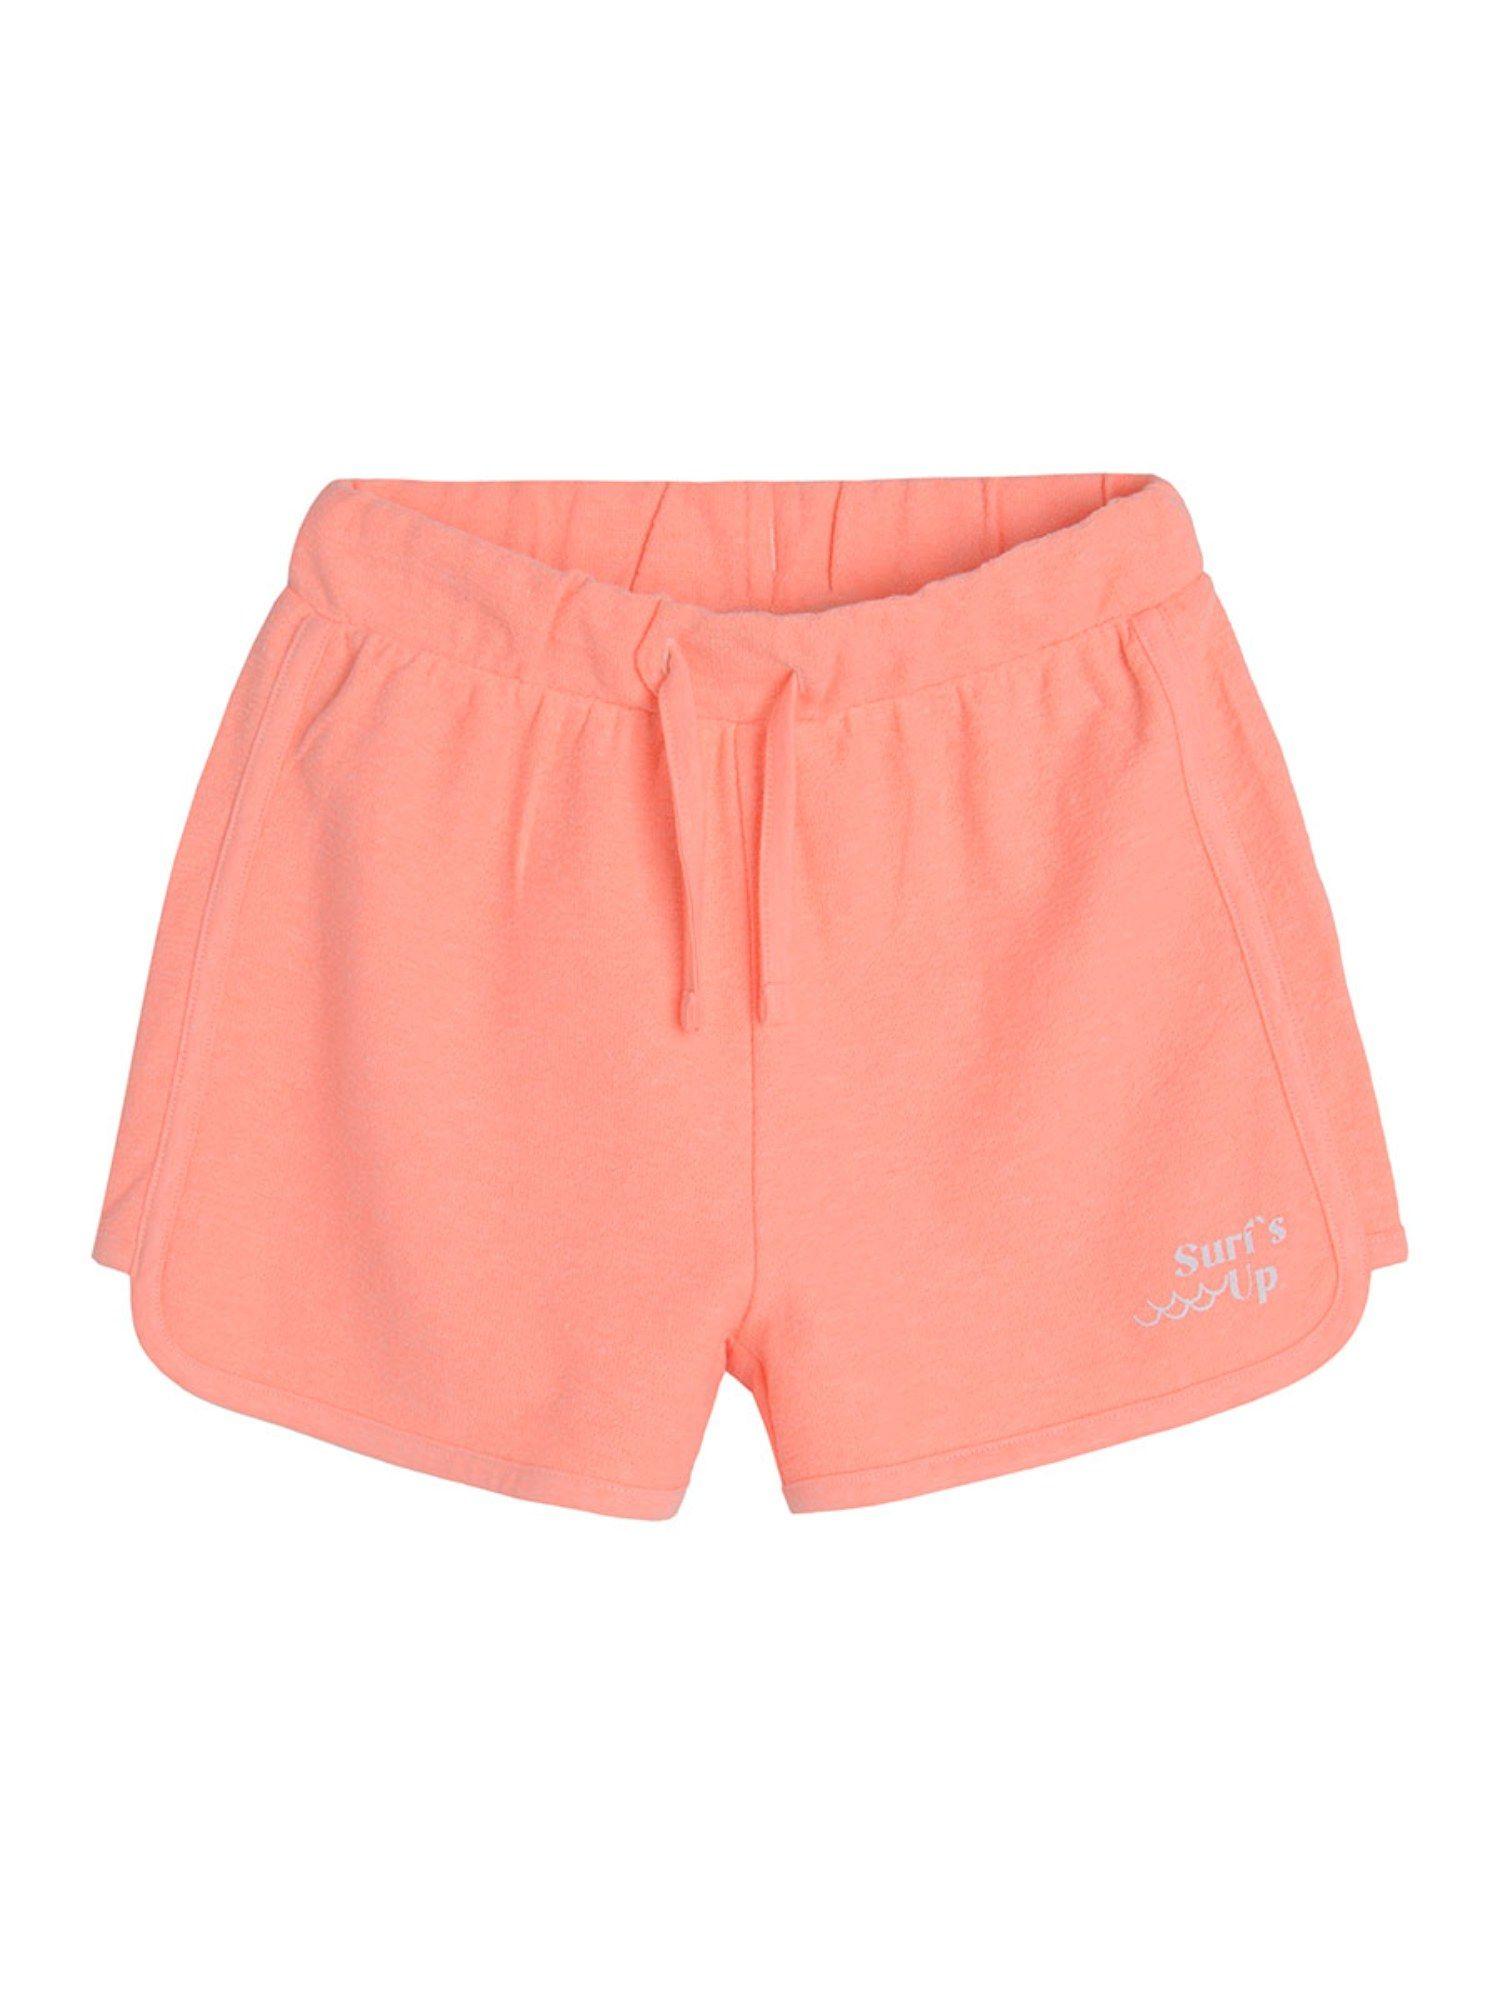 smyk girls pink solid shorts